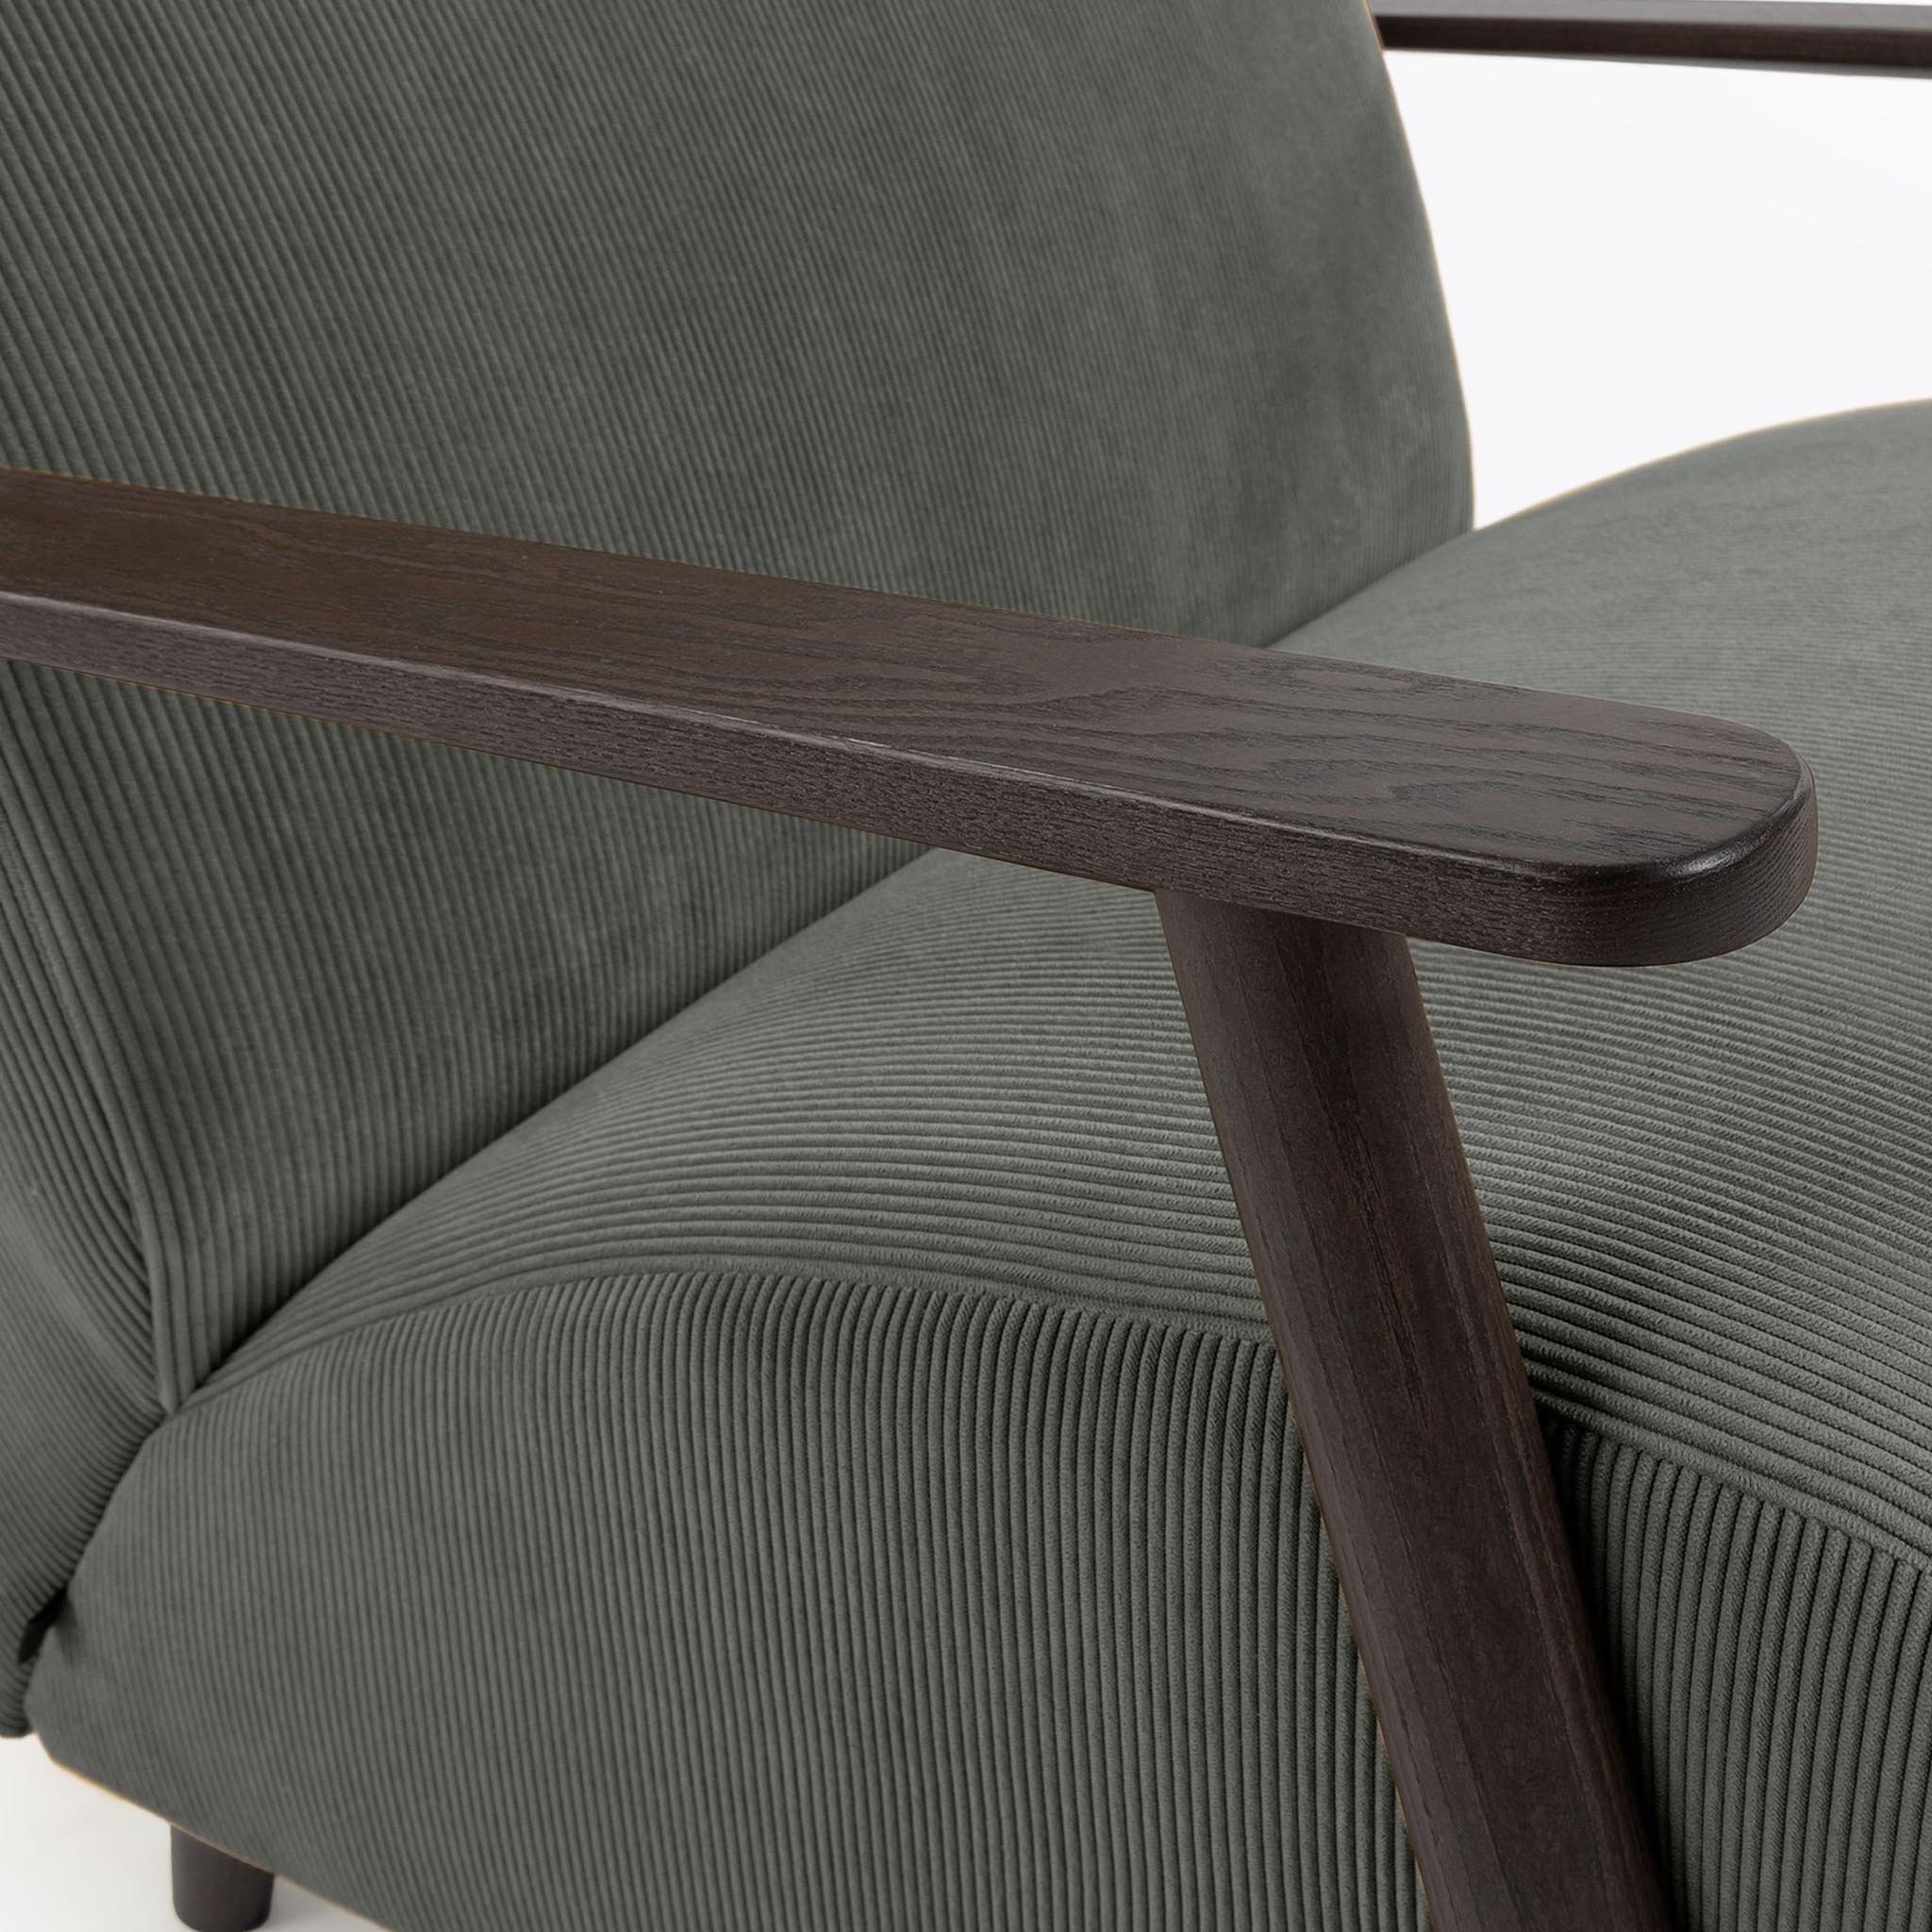 Kave Home Sessel Meghan - SKU #S517PN15 in Farbe Grau - Beine in Dunkelbraun - Beine in dunklen Eschenholz